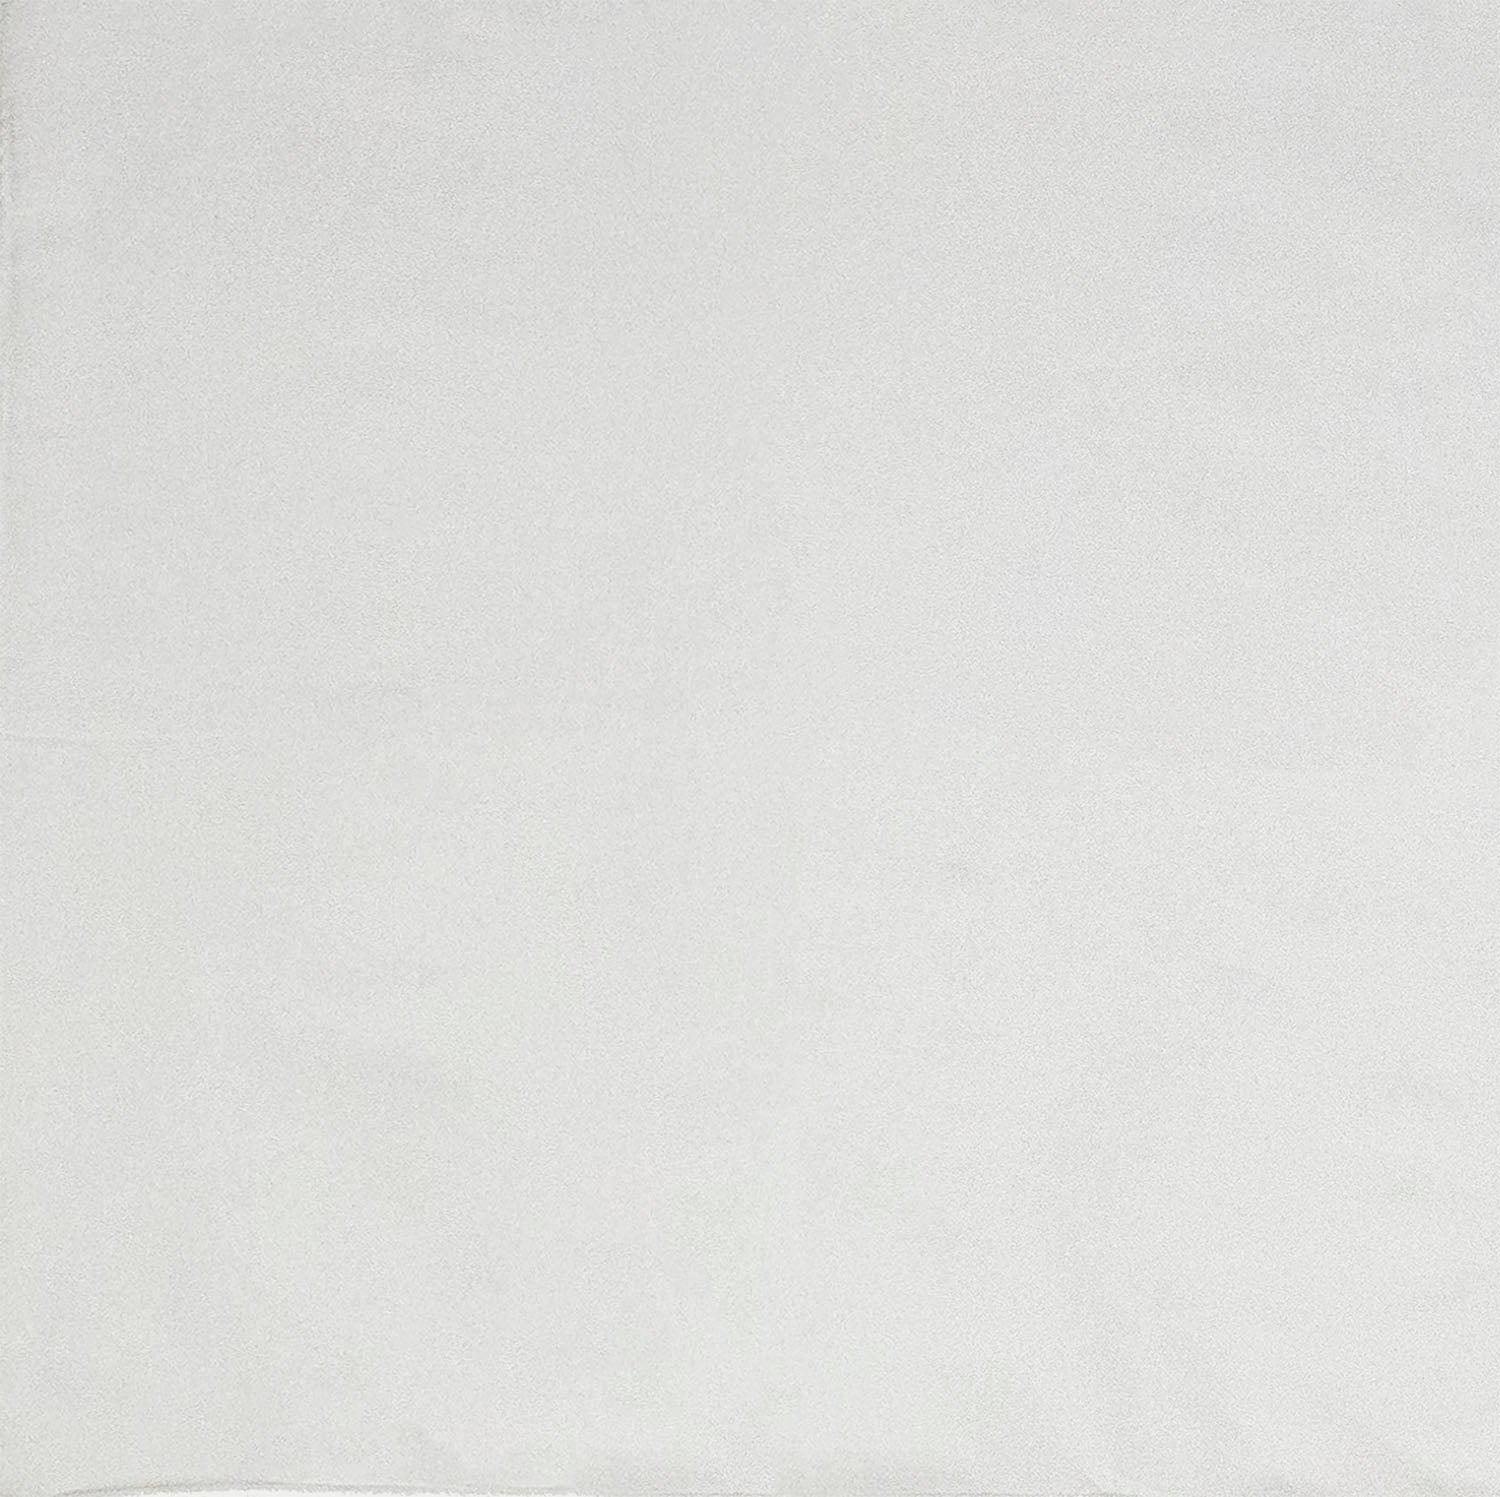 Fine Sheer White Cotton Muslin Handkerchief - Burnley & Trowbridge Co.